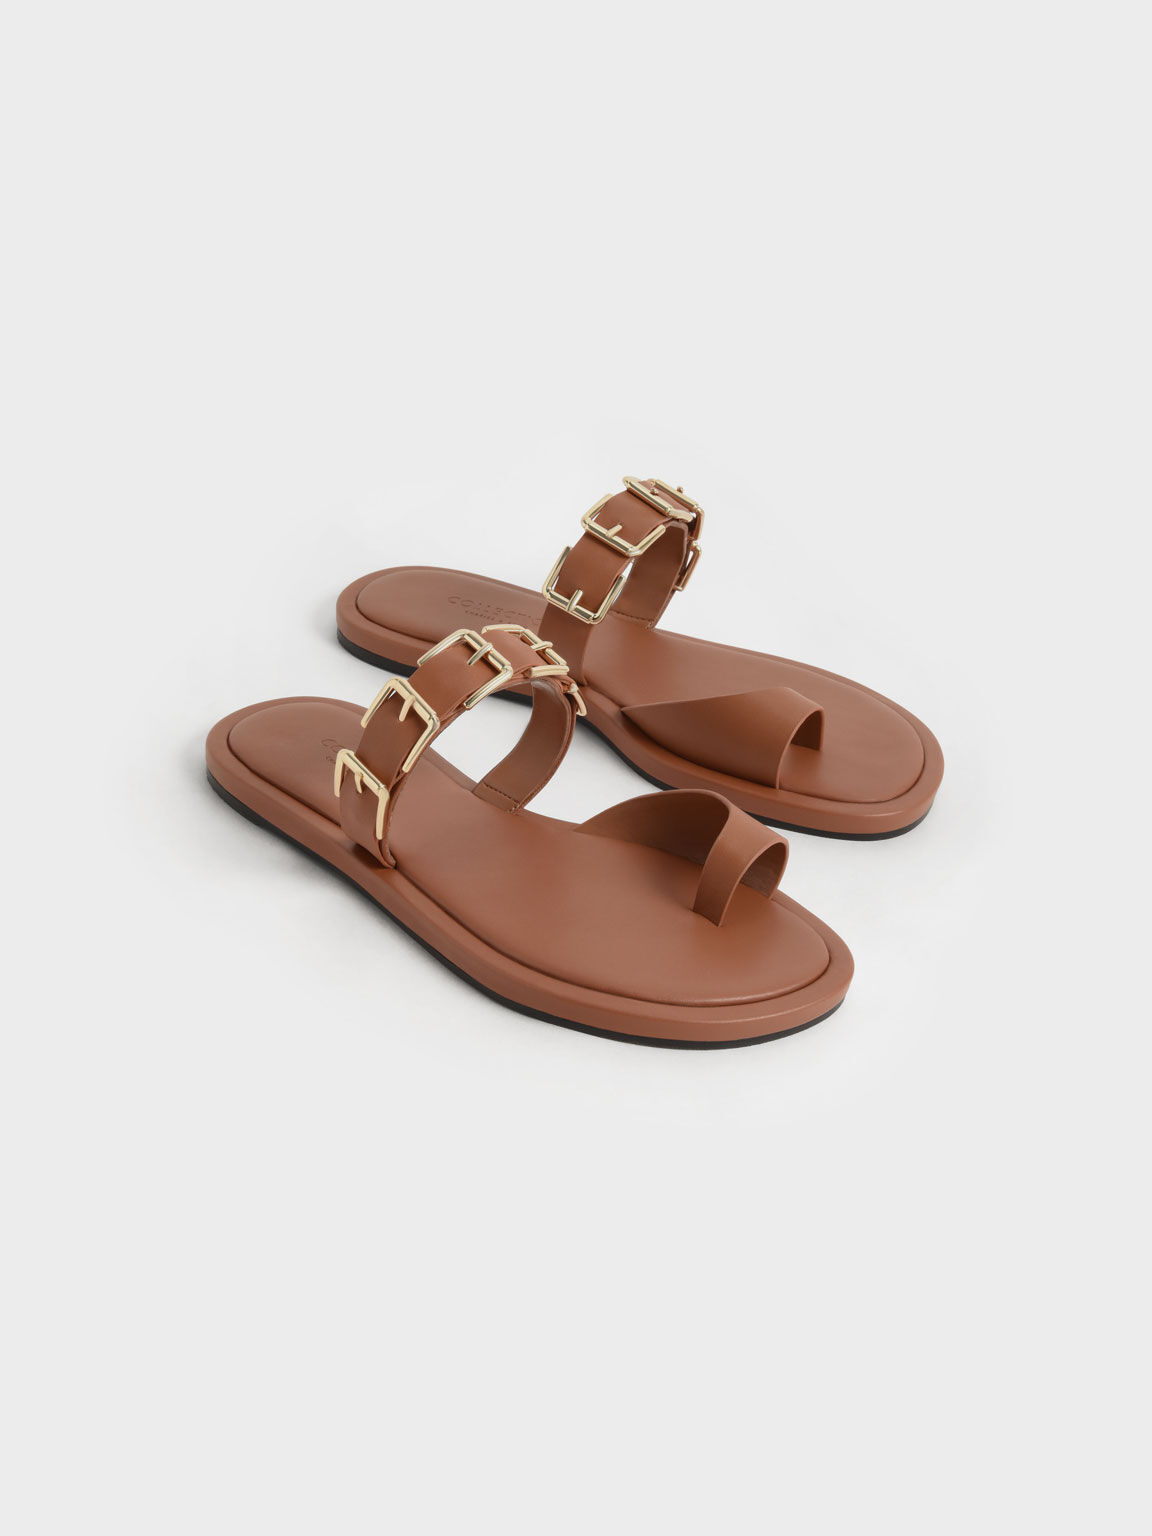 Sandal Toe-Ring Buckled Leather, Brown, hi-res